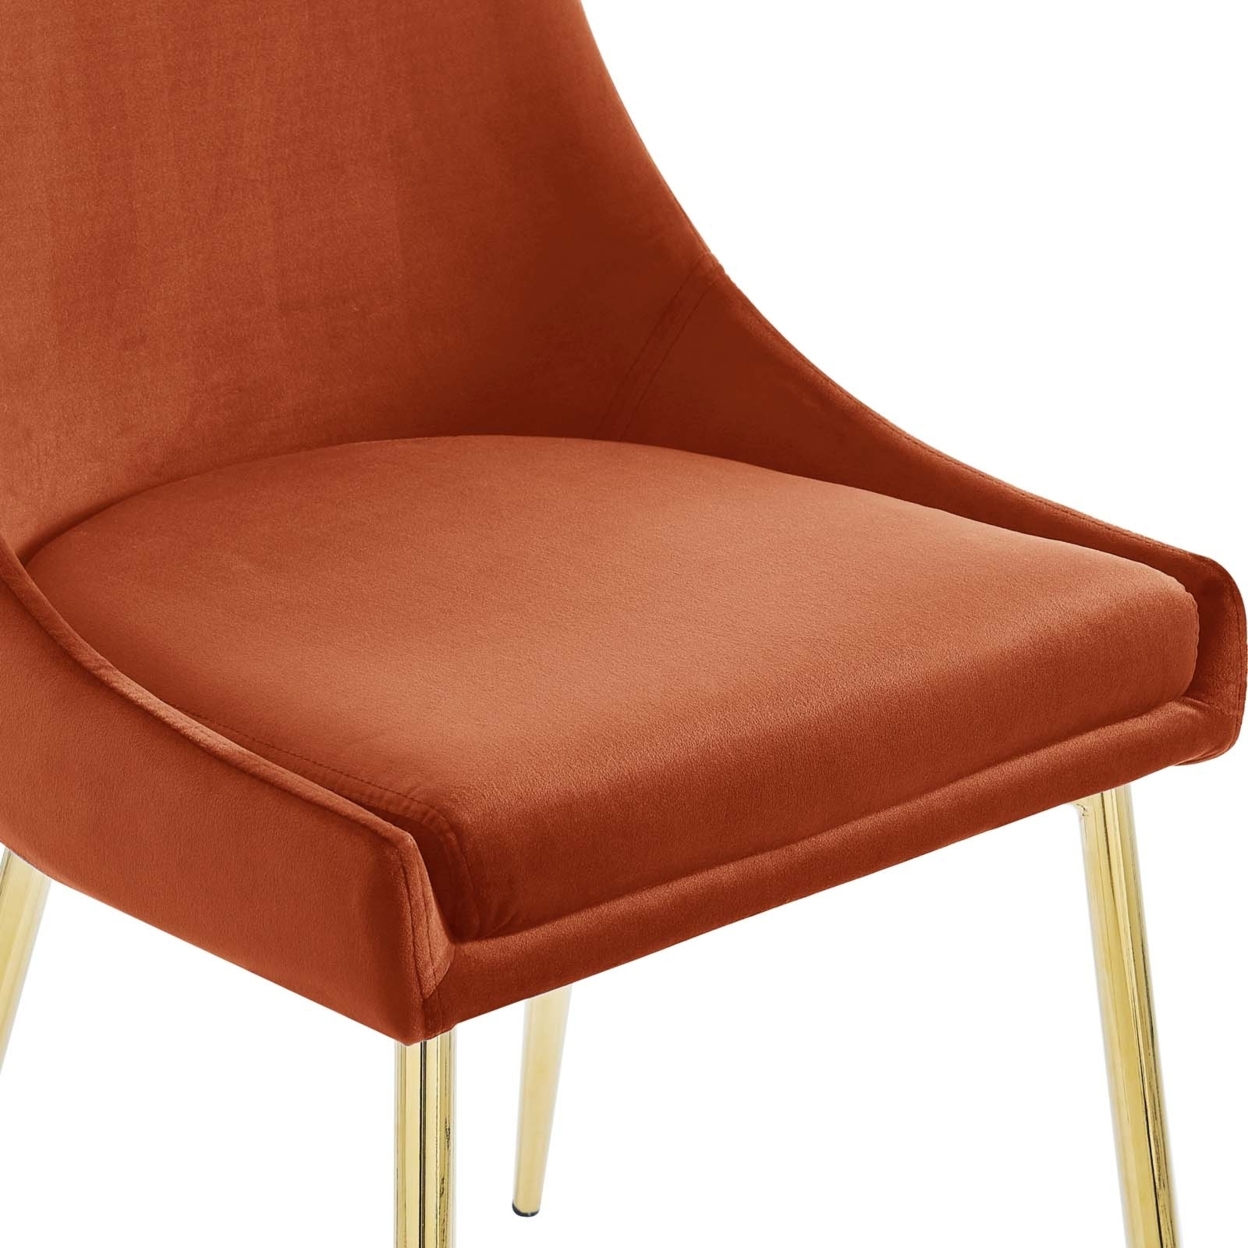 Viscount Performance Velvet Dining Chairs - Set Of 2, Gold Orange